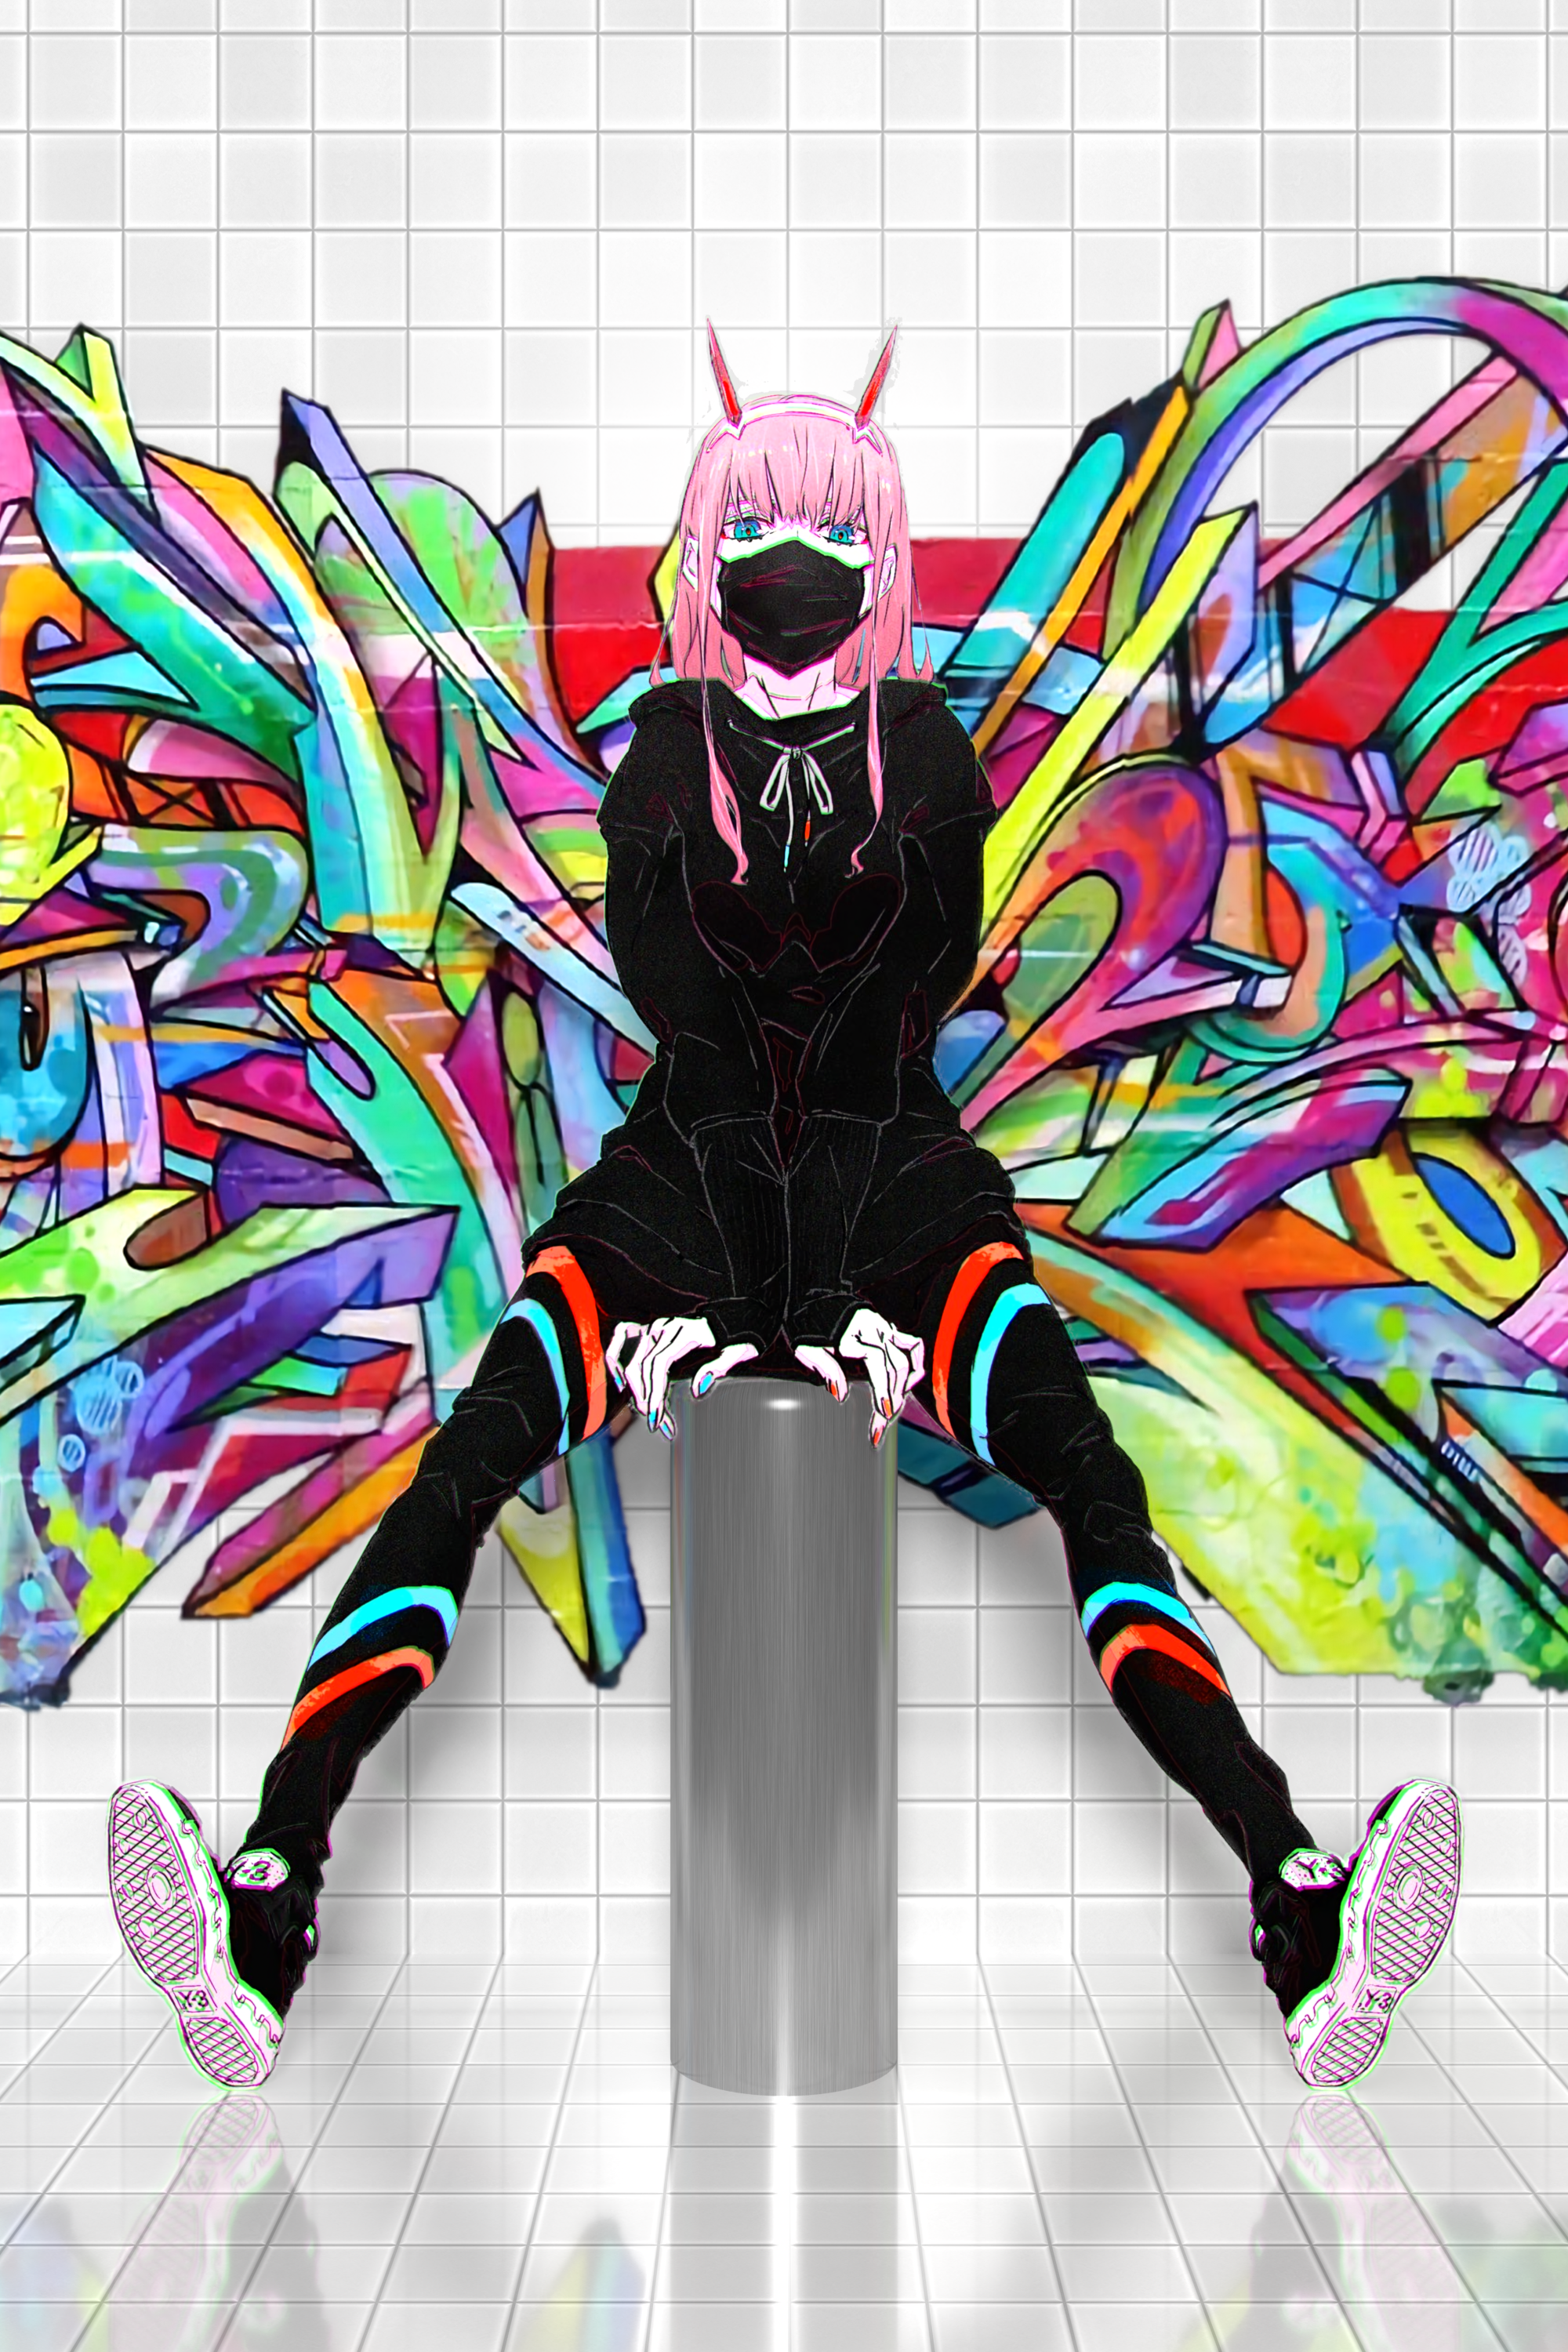 Anime Graffiti Wallpaper by Seiruzan on DeviantArt